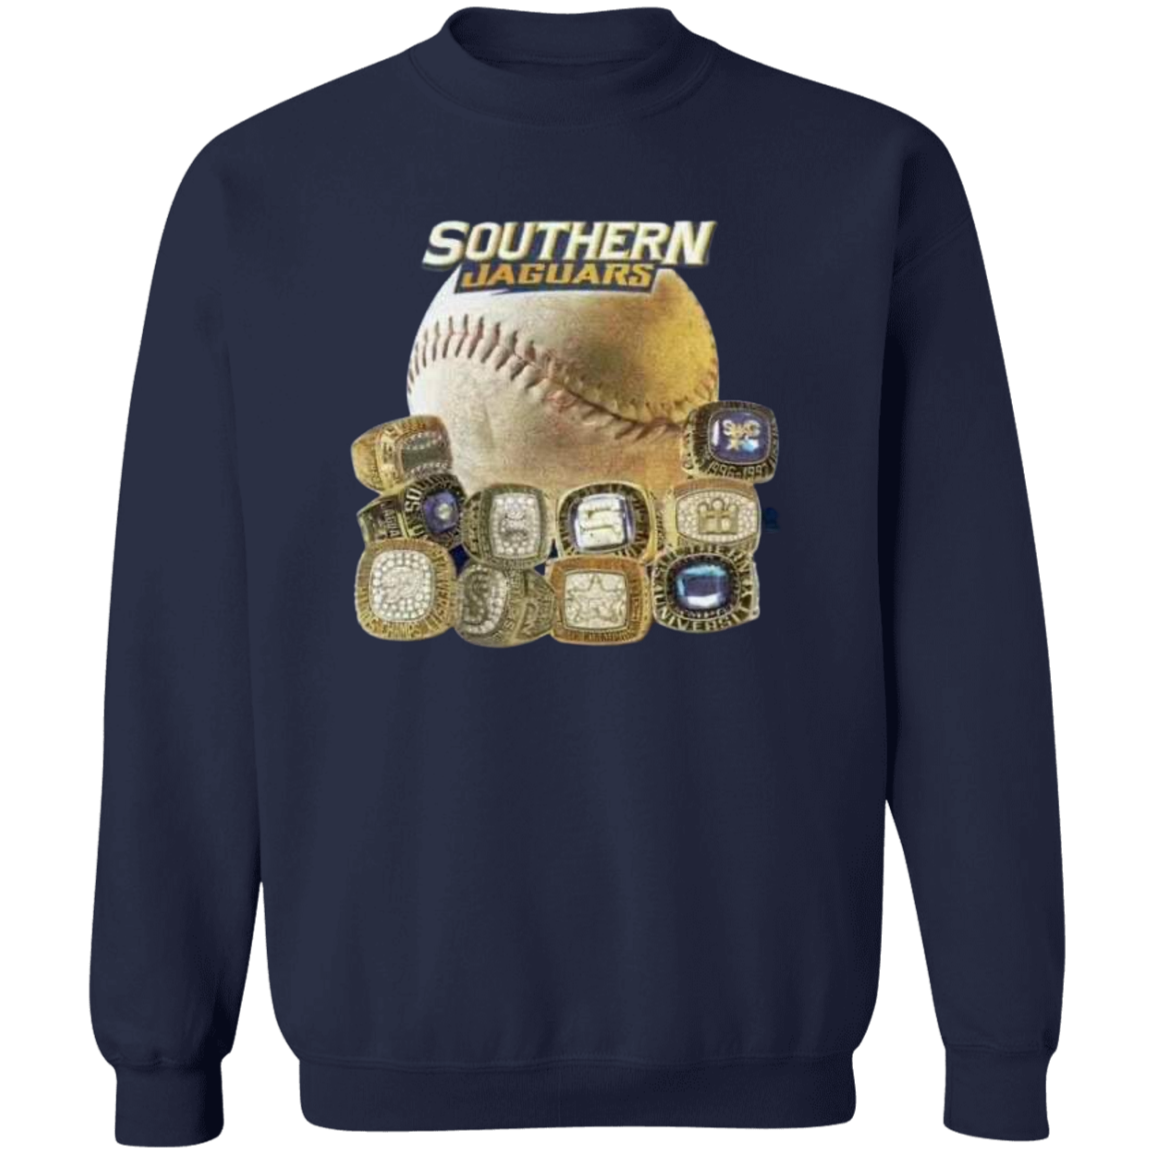 SU Baseball SWAC (Southern Wins Another Championship)  Rings Z65x Pullover Crewneck Sweatshirt 8 oz (Closeout)